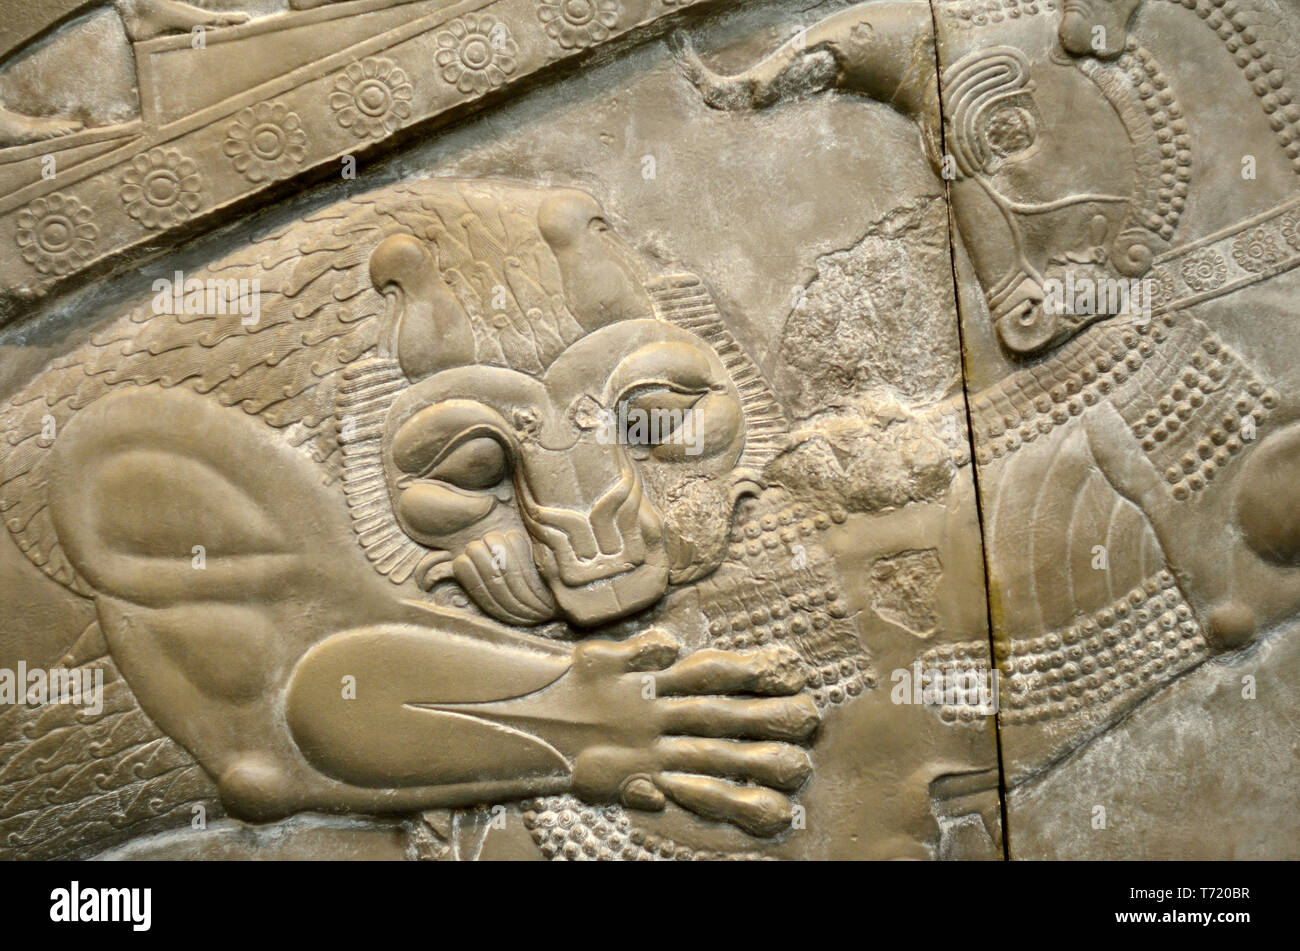 British Museum, Bloomsbury, London, England, UK. Skulpturen aus dem Palast des Darius (518-319 v. Chr.) in Persepolis, Iran. Gips (1892), de Stockfoto